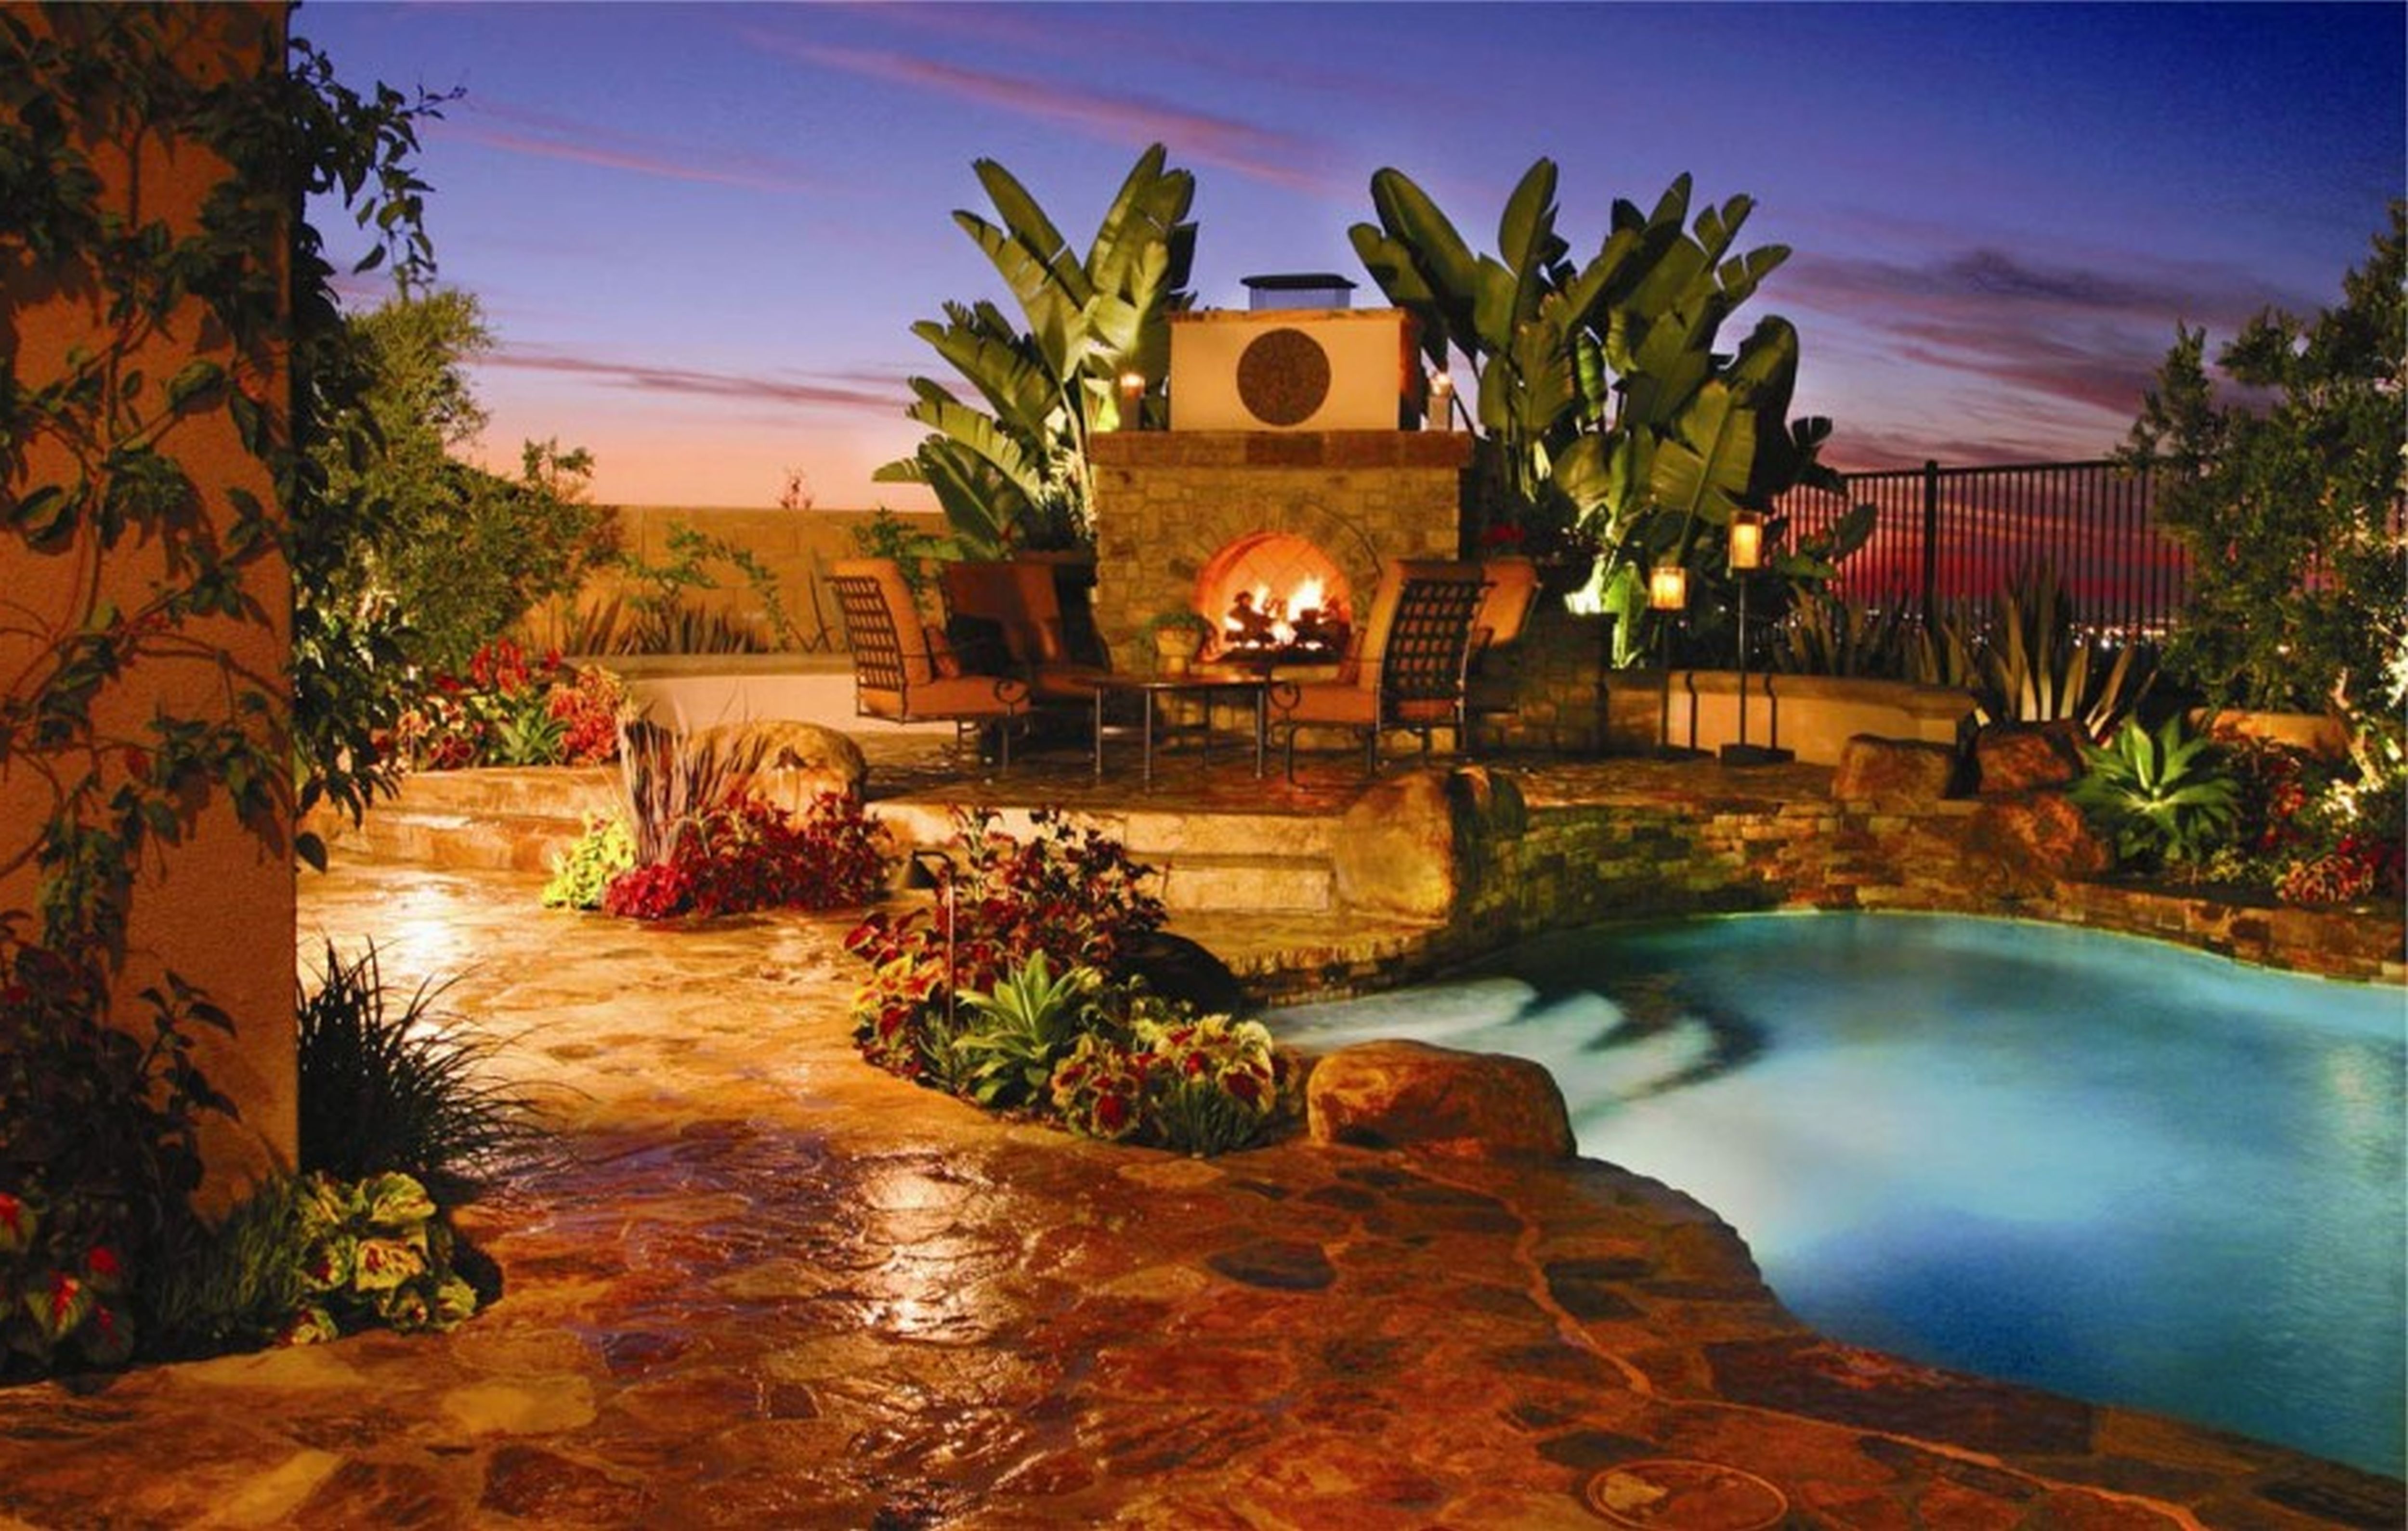 Designing Your Backyard Swimming Pool: Part I of II ...